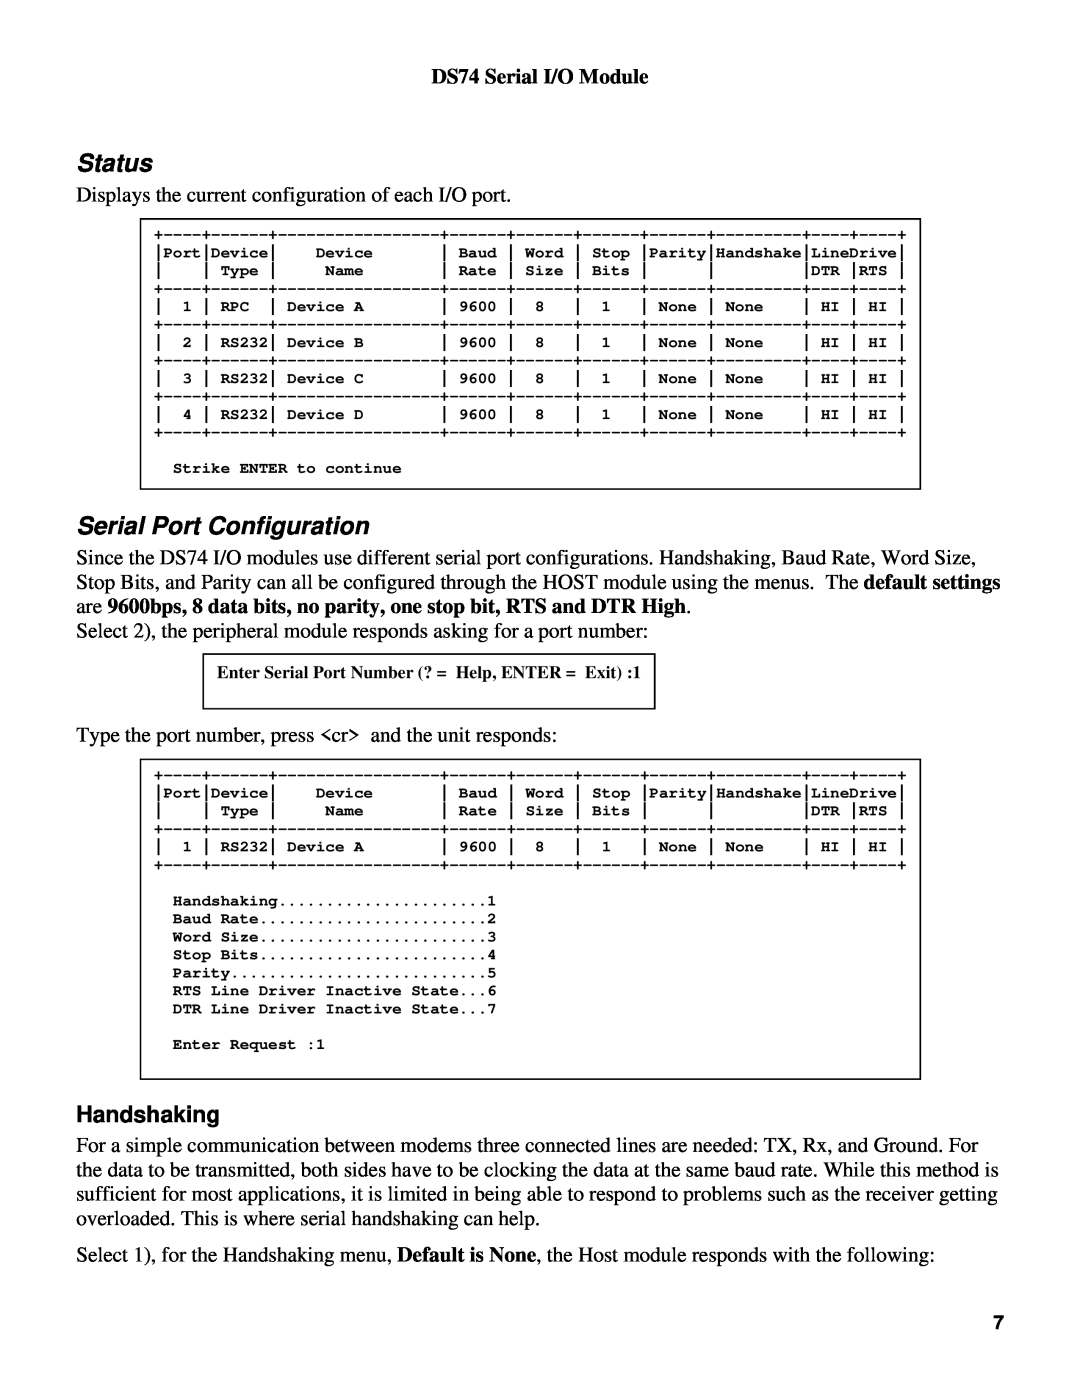 Bay Technical Associates manual Status, Serial Port Configuration, Handshaking, DS74 Serial I/O Module 